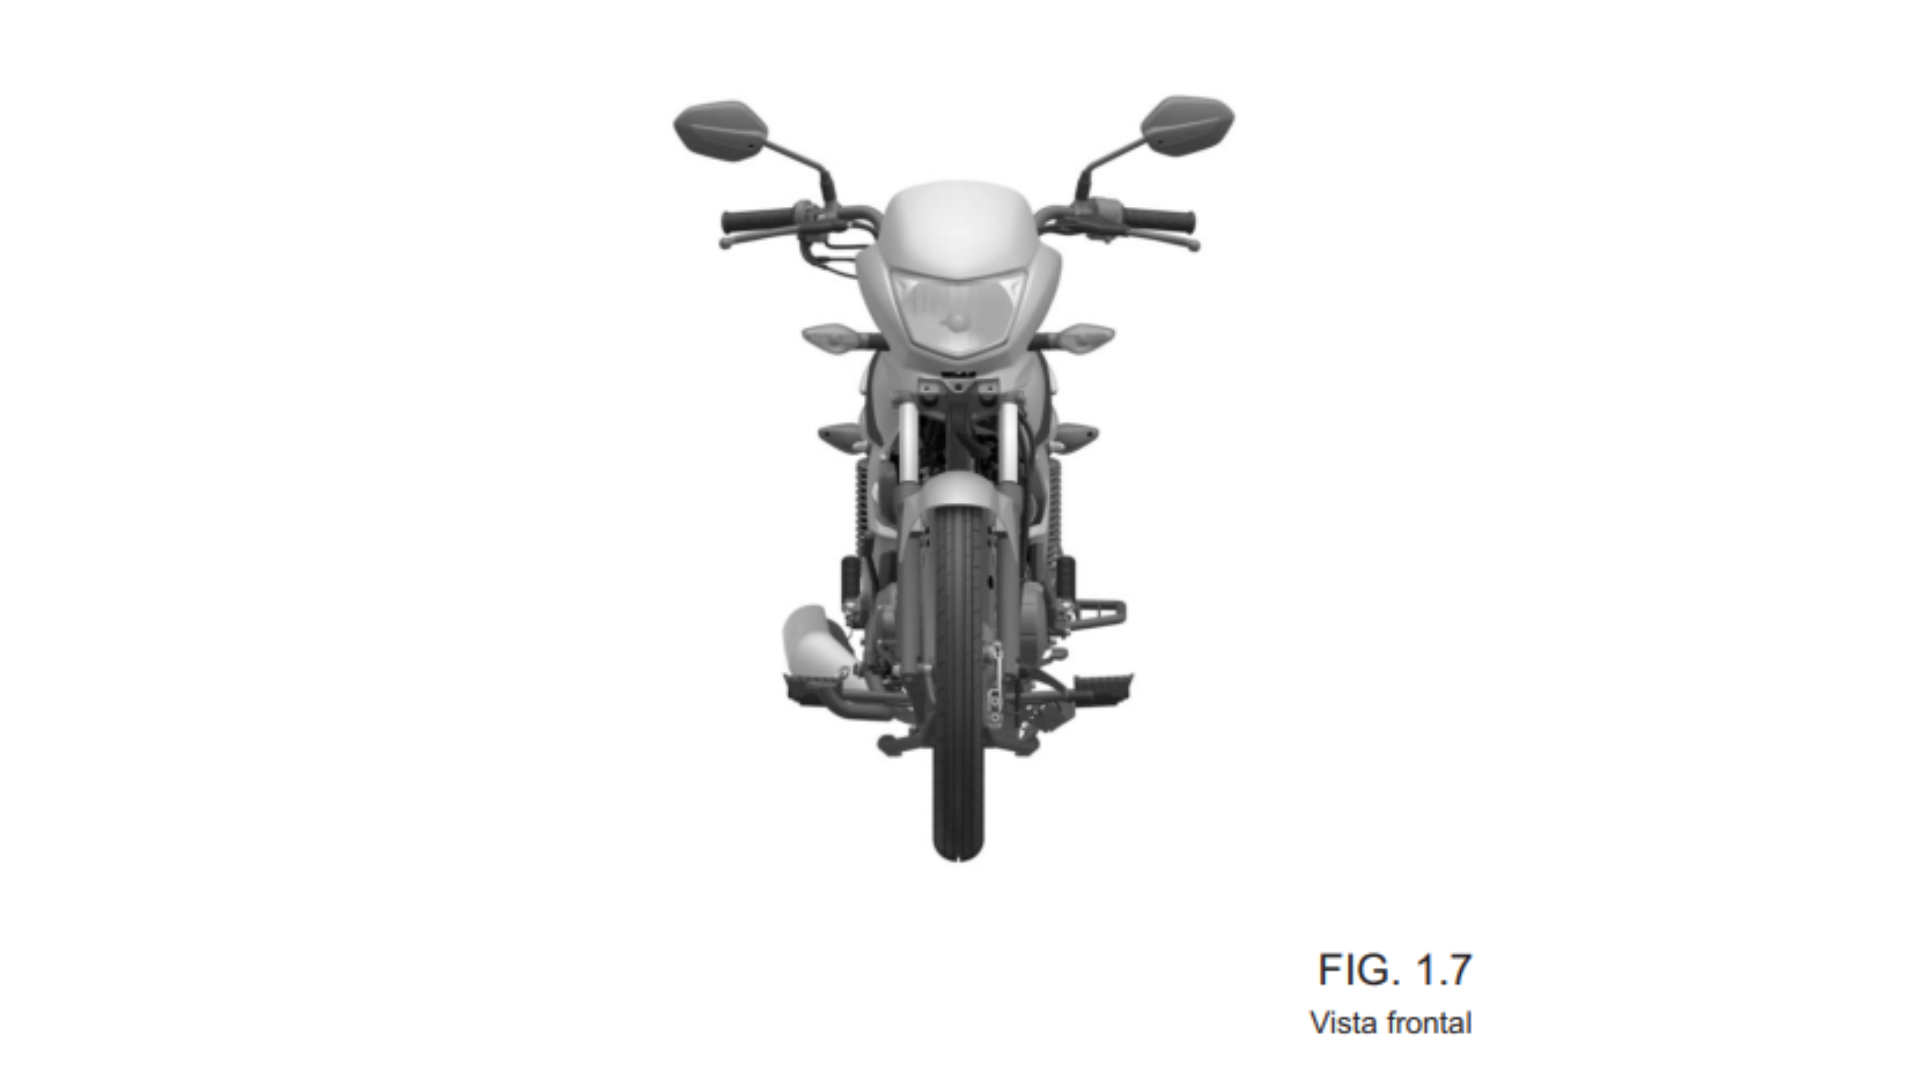 Nova moto Honda registrada no inpi - Shine 100